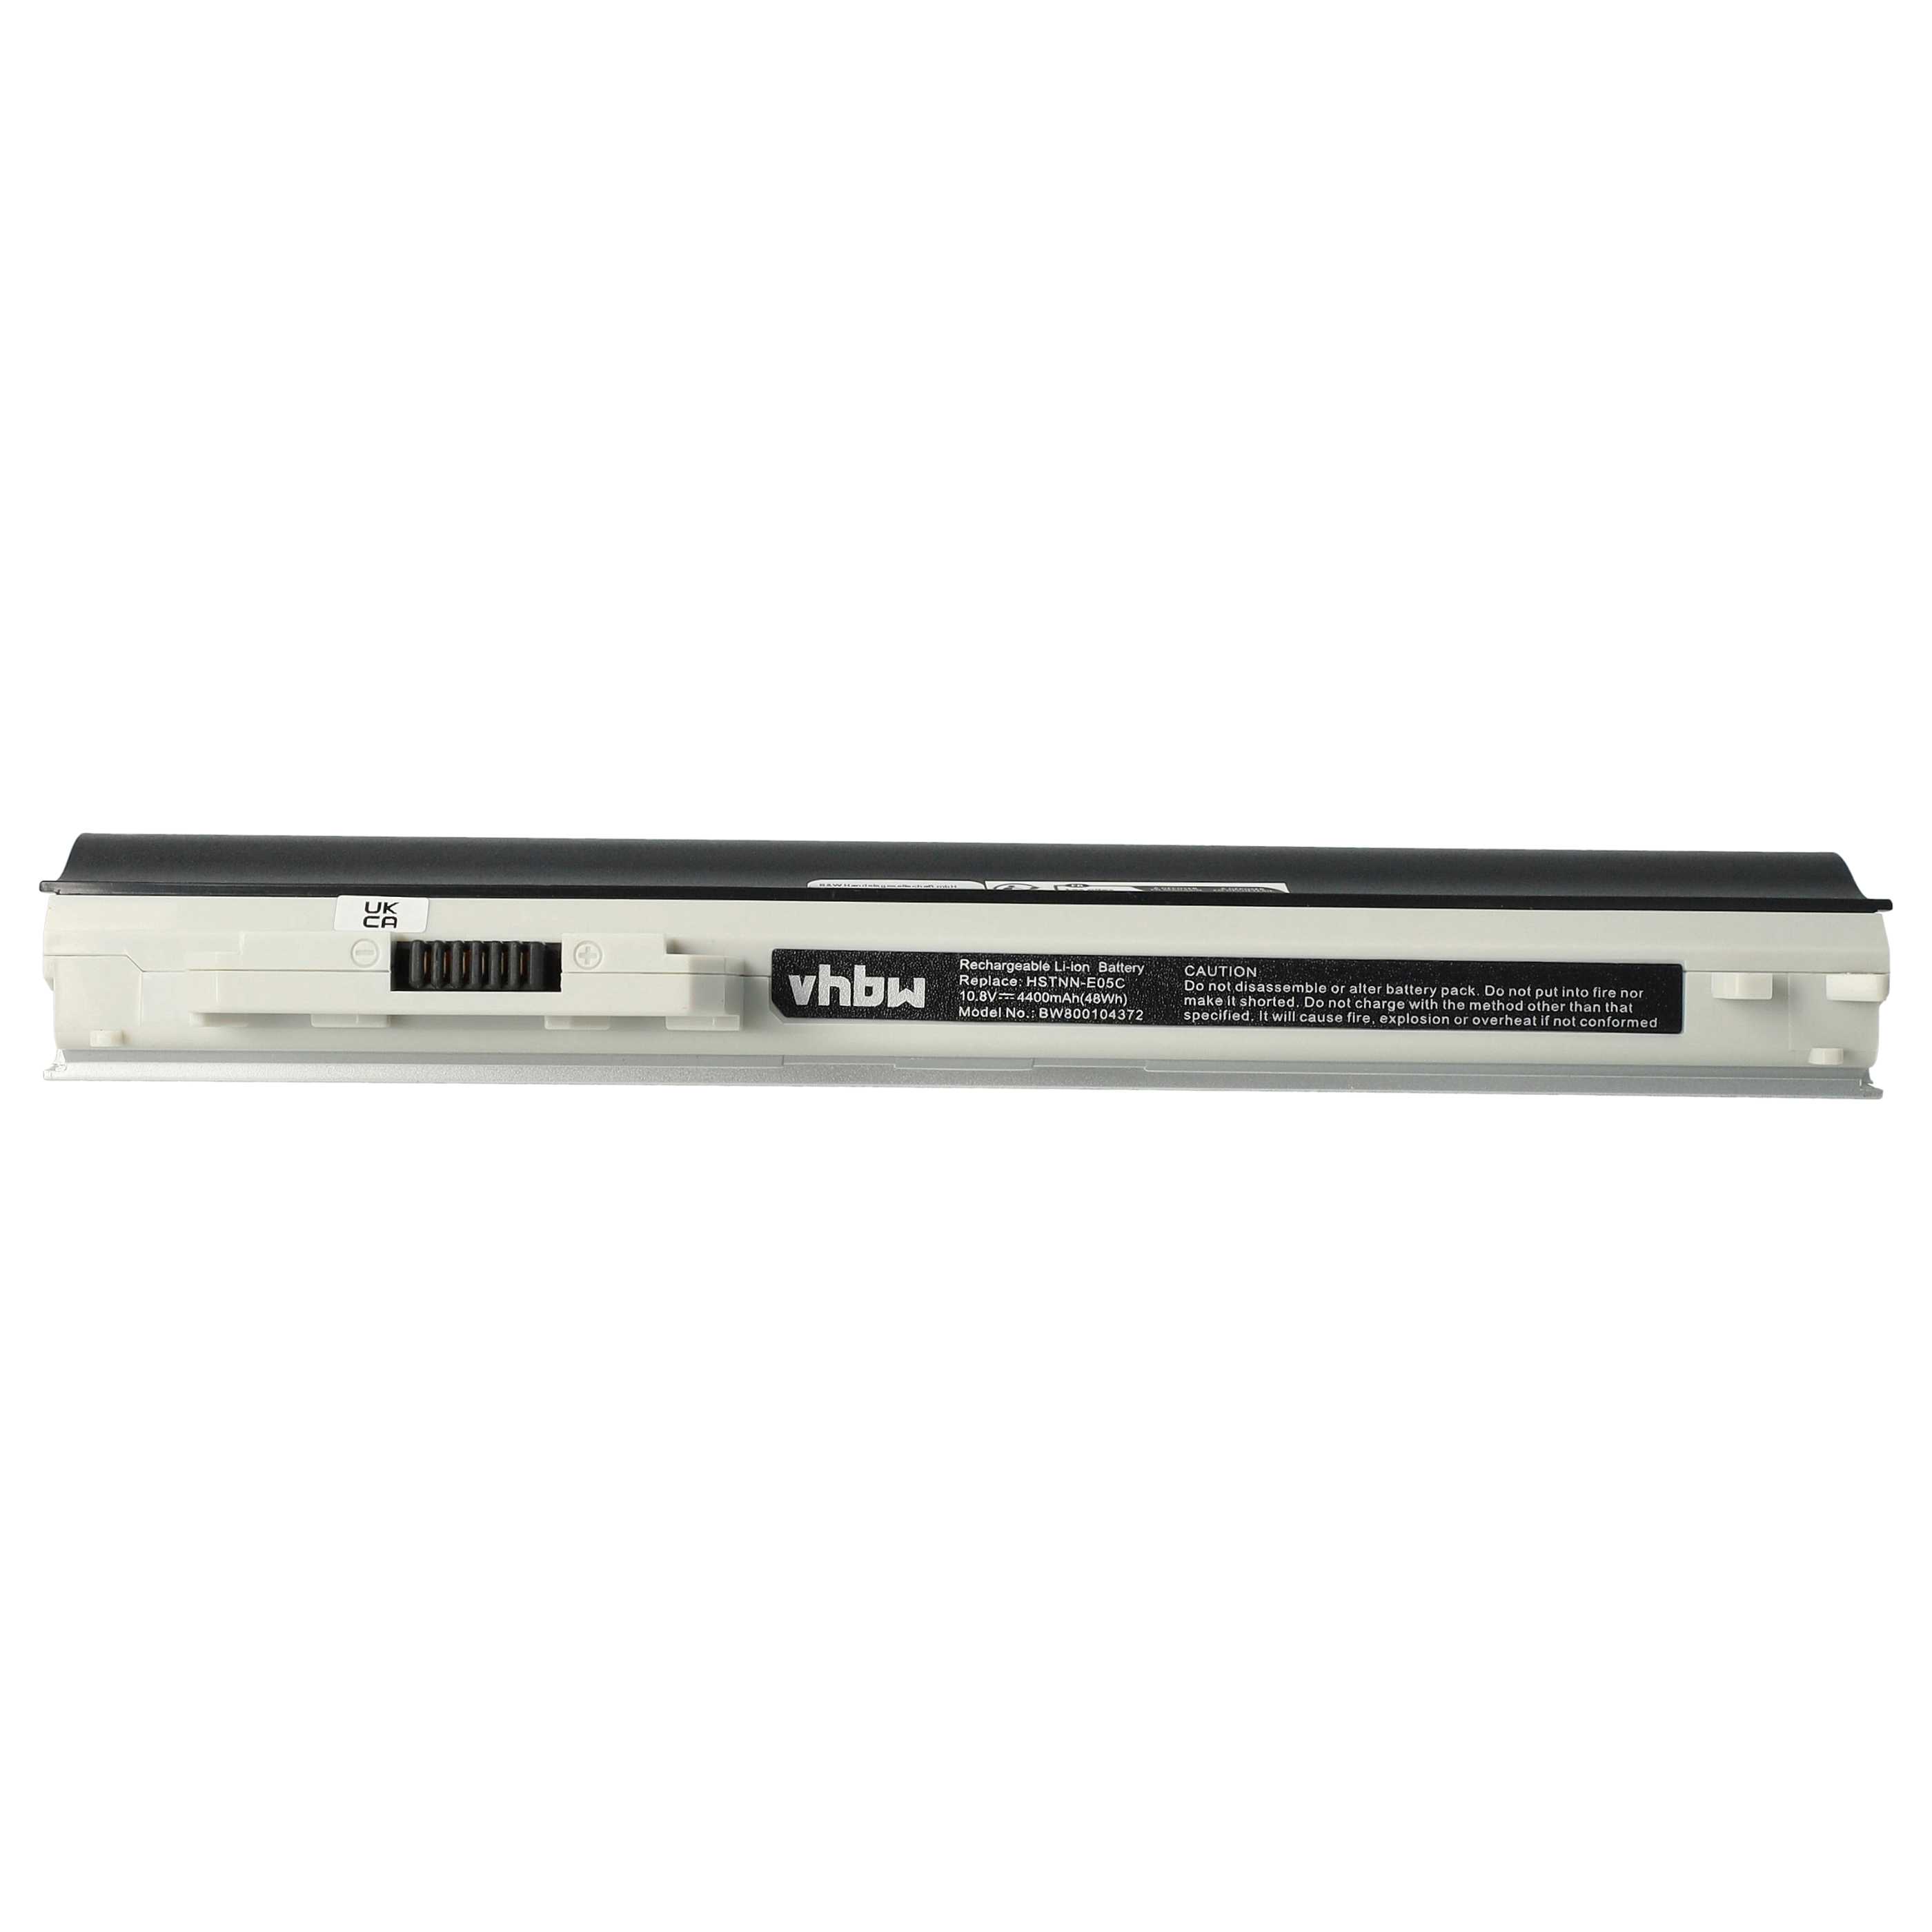 Akumulator do laptopa zamiennik HP 628419-001, 626869-851, 626869-321 - 4400 mAh 11,1 V Li-Ion, srebrnoszary